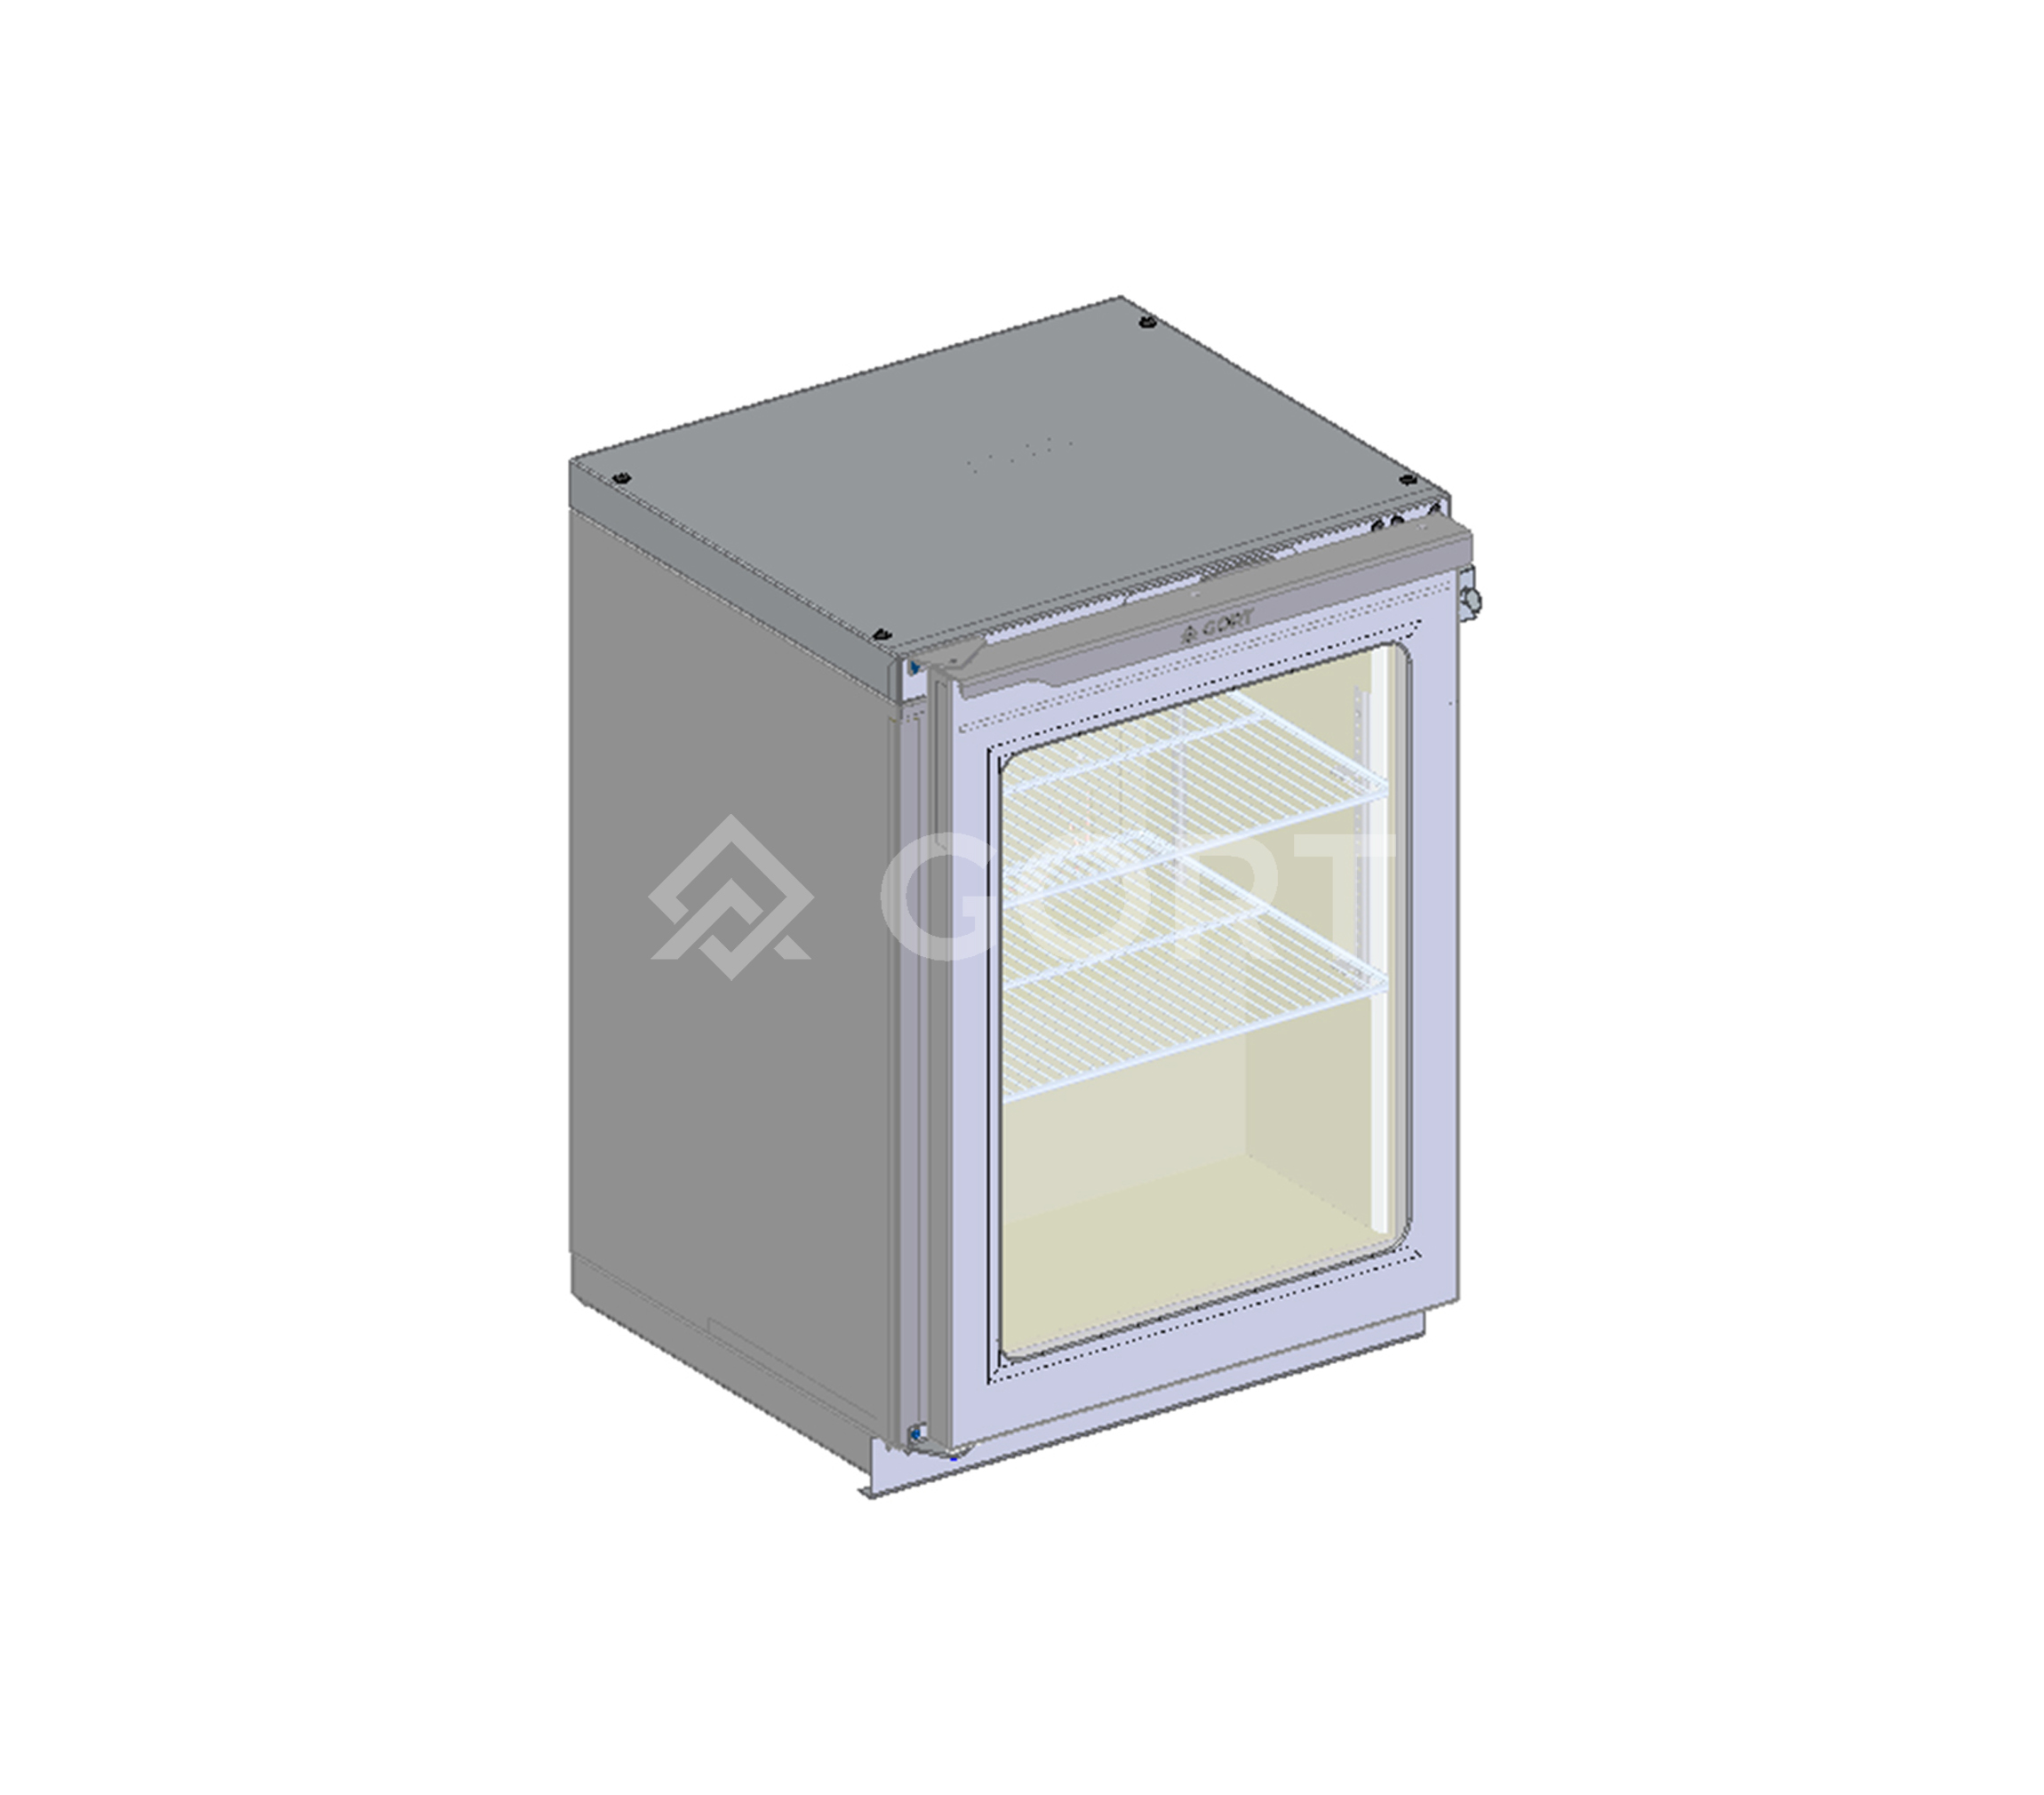 BAR BOTTLE COOLER with glass door – compressor at the back